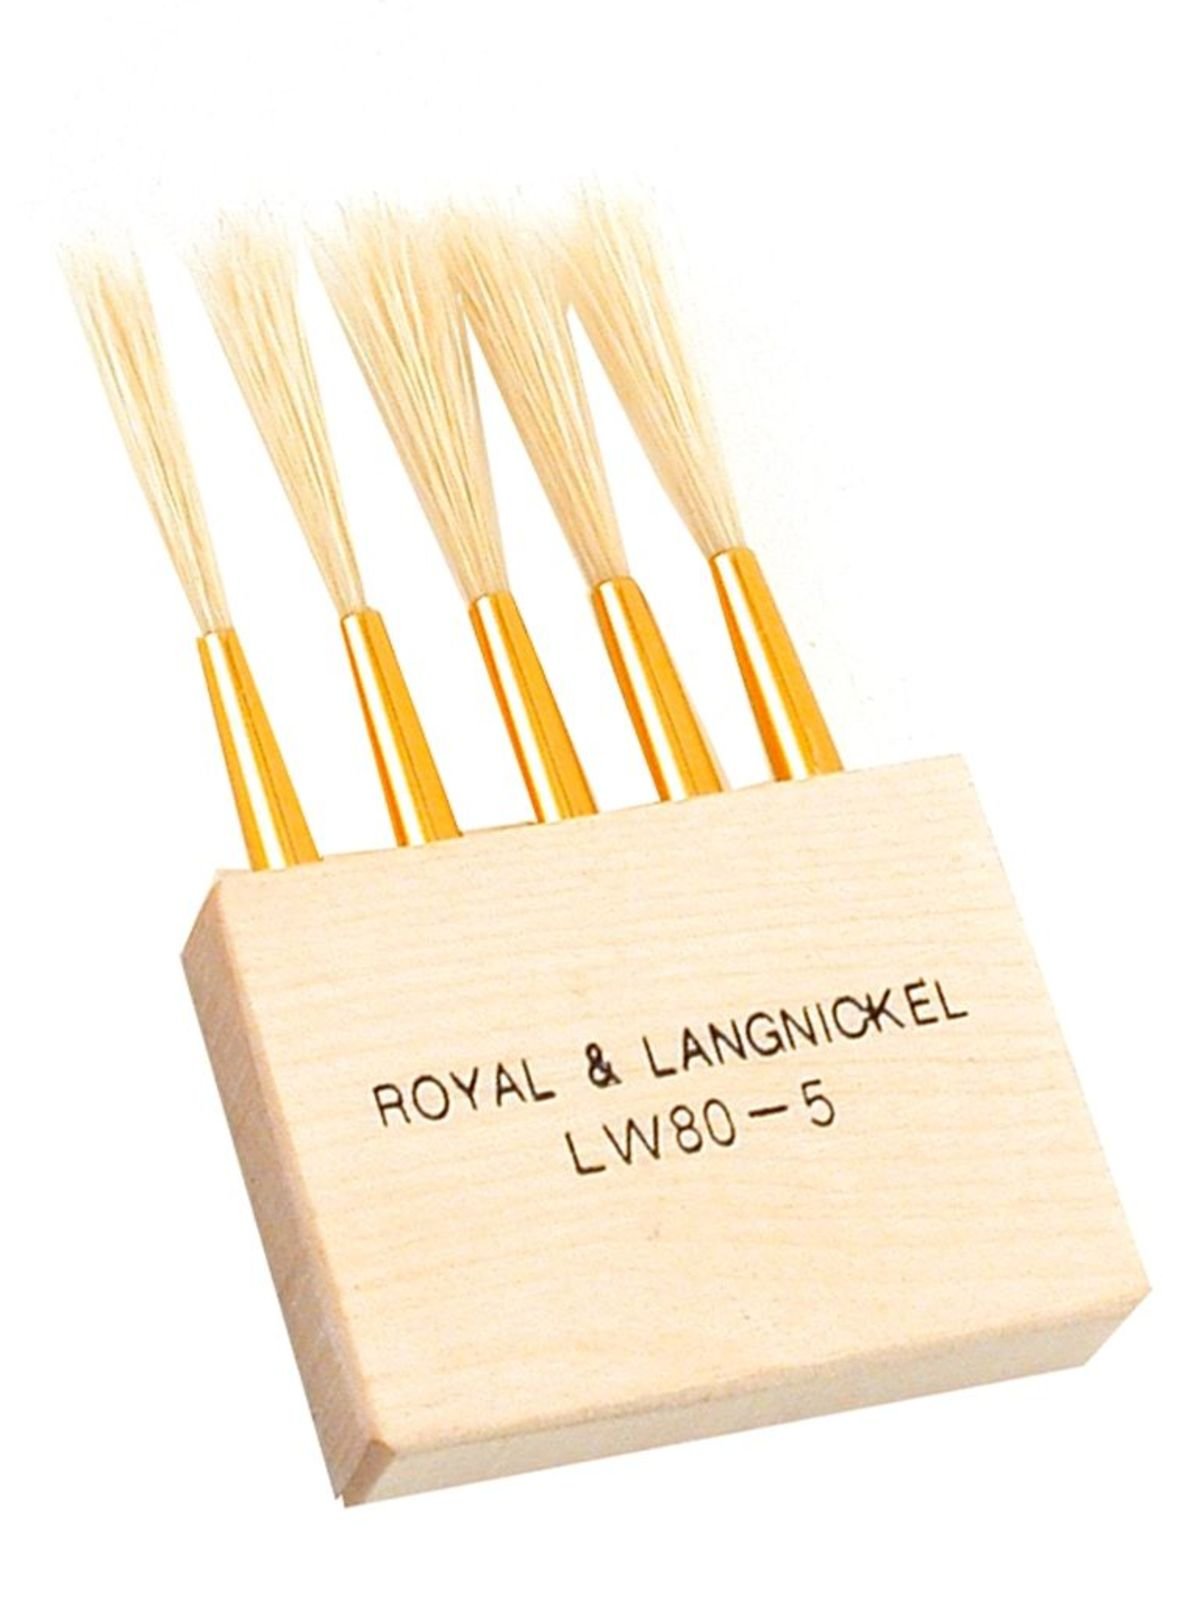 Royal & Langnickel - Pencil Overgrainer